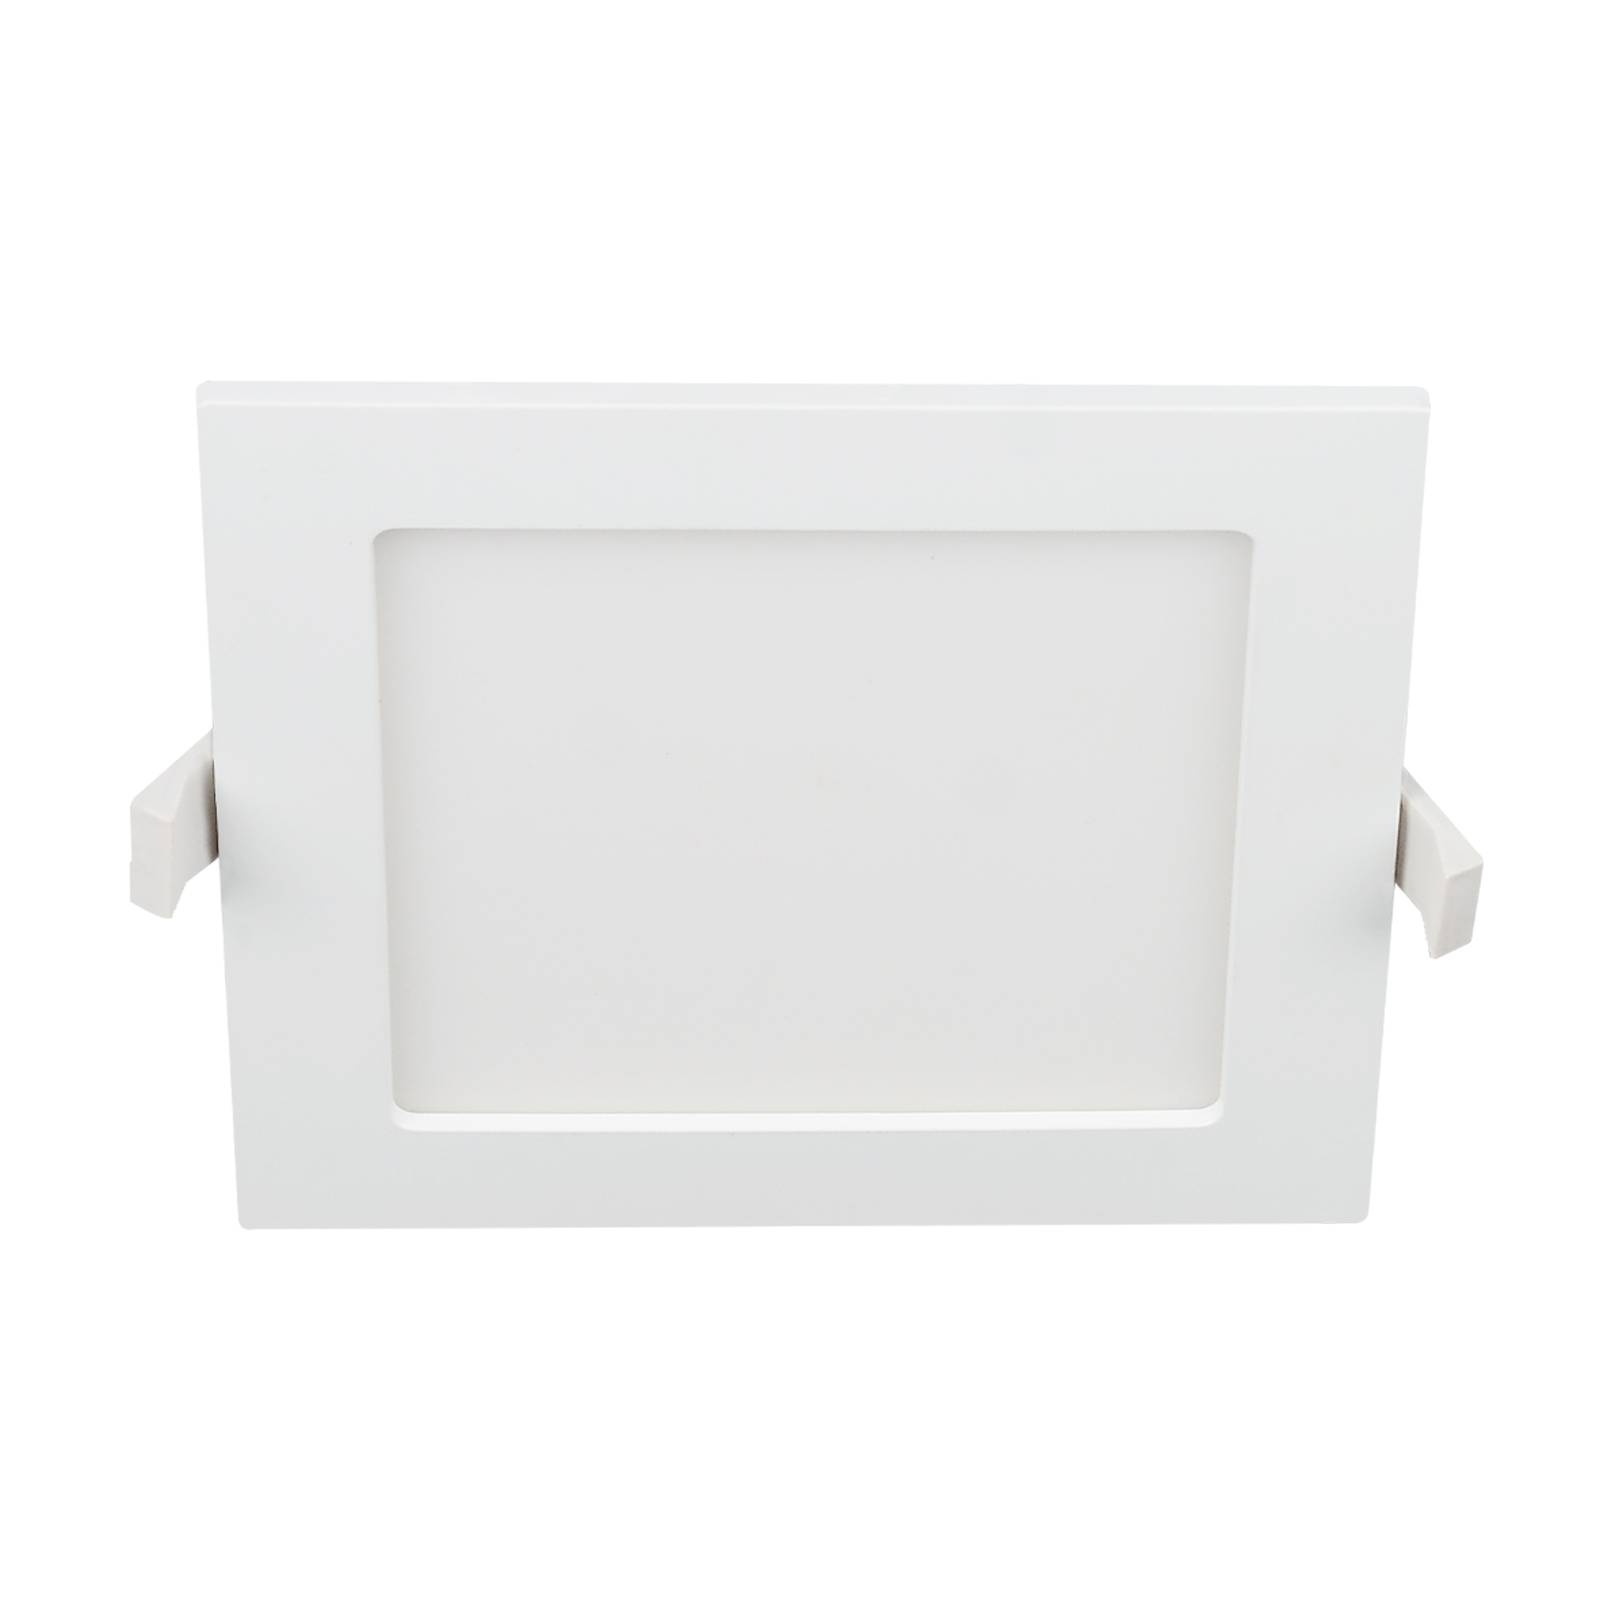 Prios Helina LED recessed light, white, 22 cm 24 W